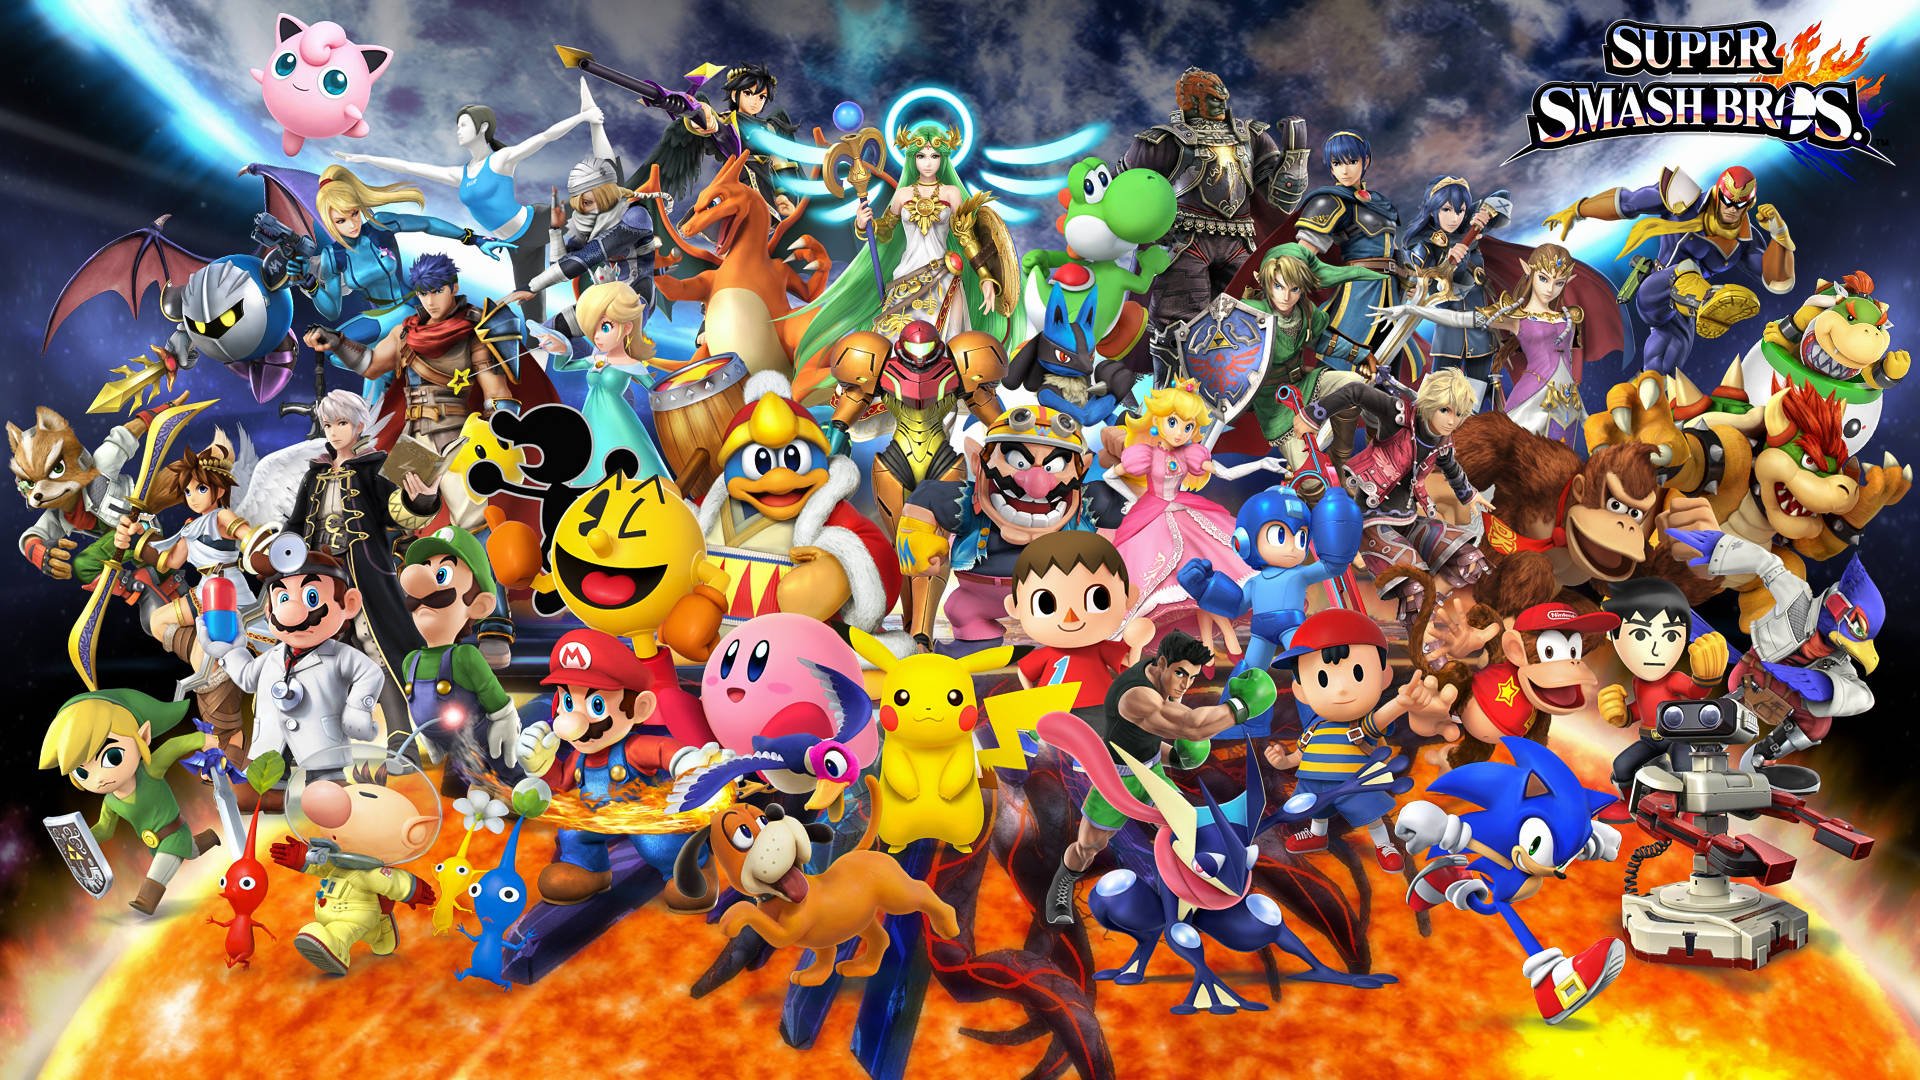 Free Super Smash Bros Wallpaper Downloads, Super Smash Bros Wallpaper for FREE